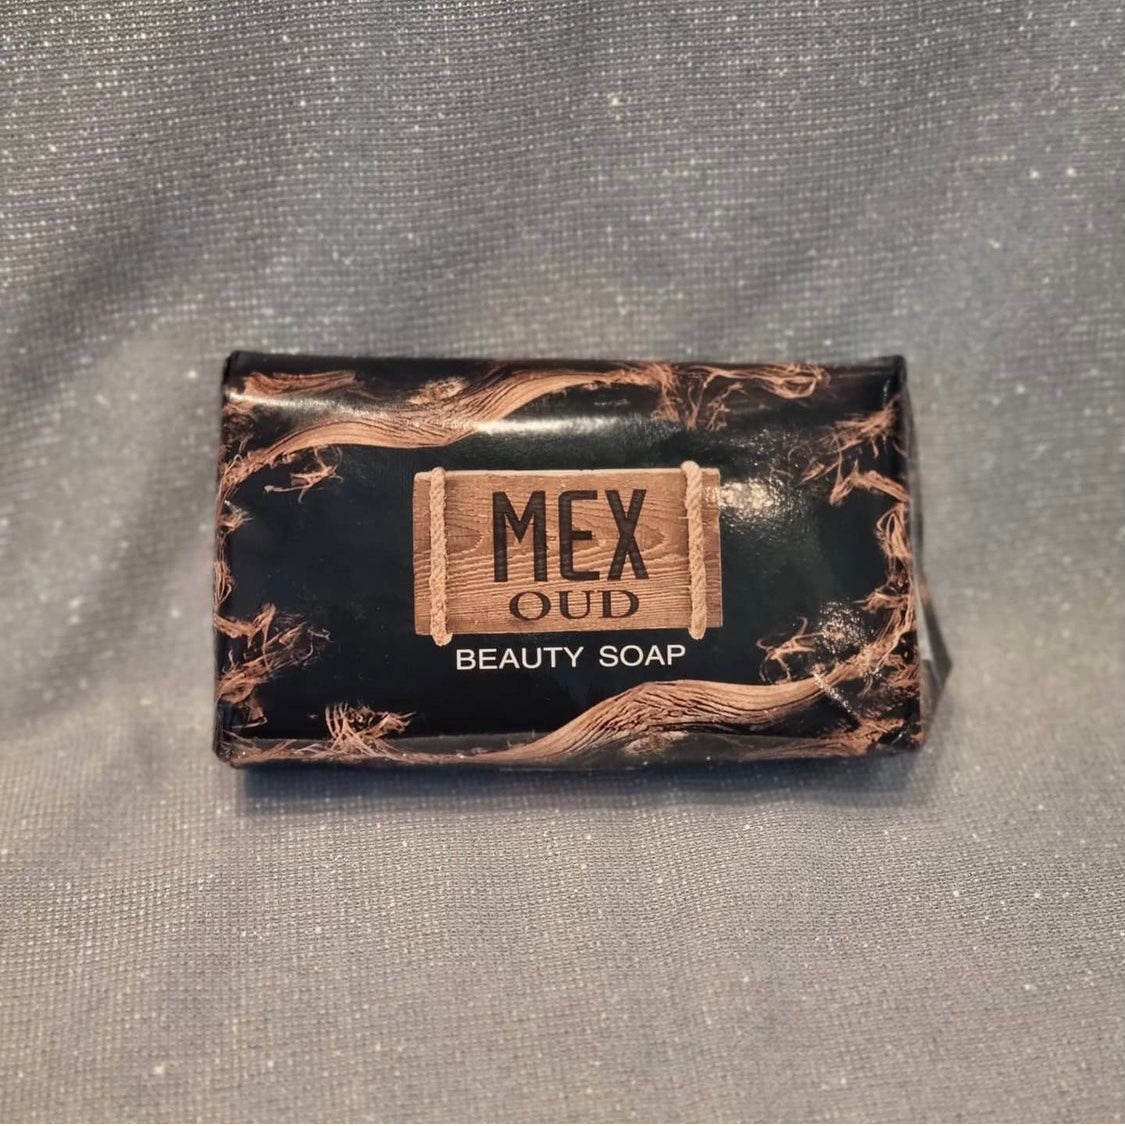 Mex Oud Beauty Soap Bar 125g